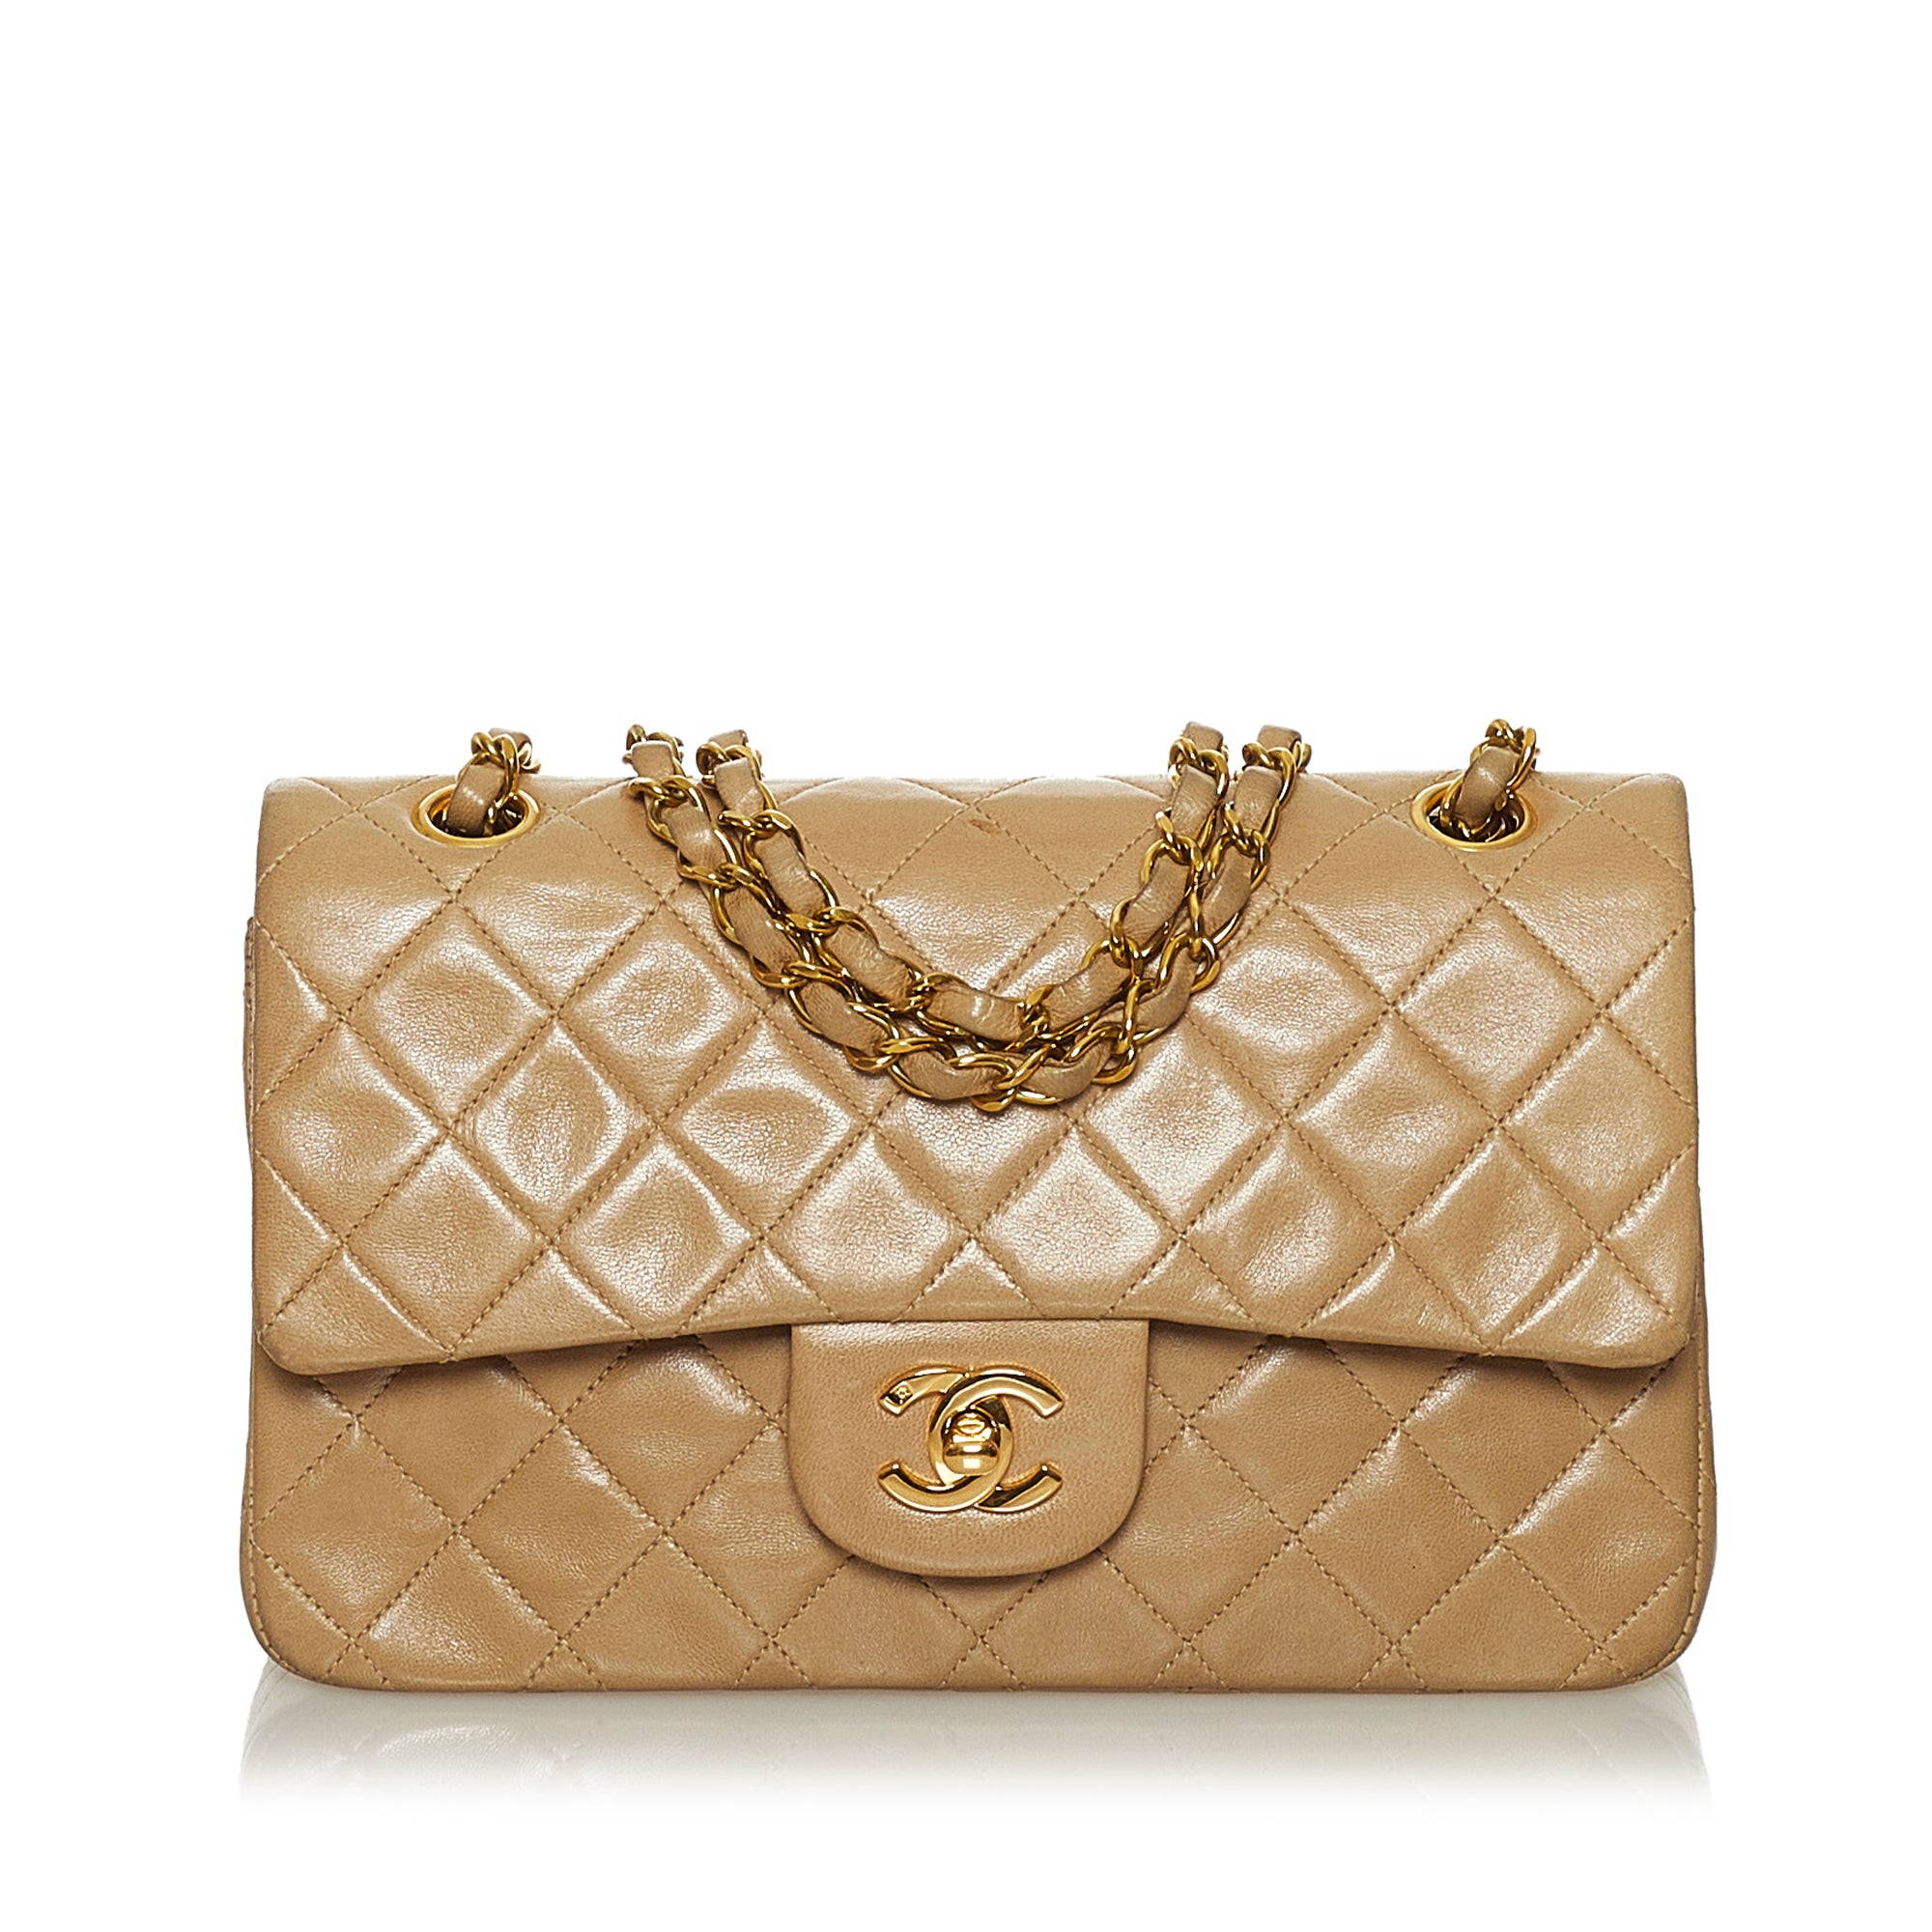 Chanel - Vintage Medium Classic Flap Bag - Beige Lambskin - GHW